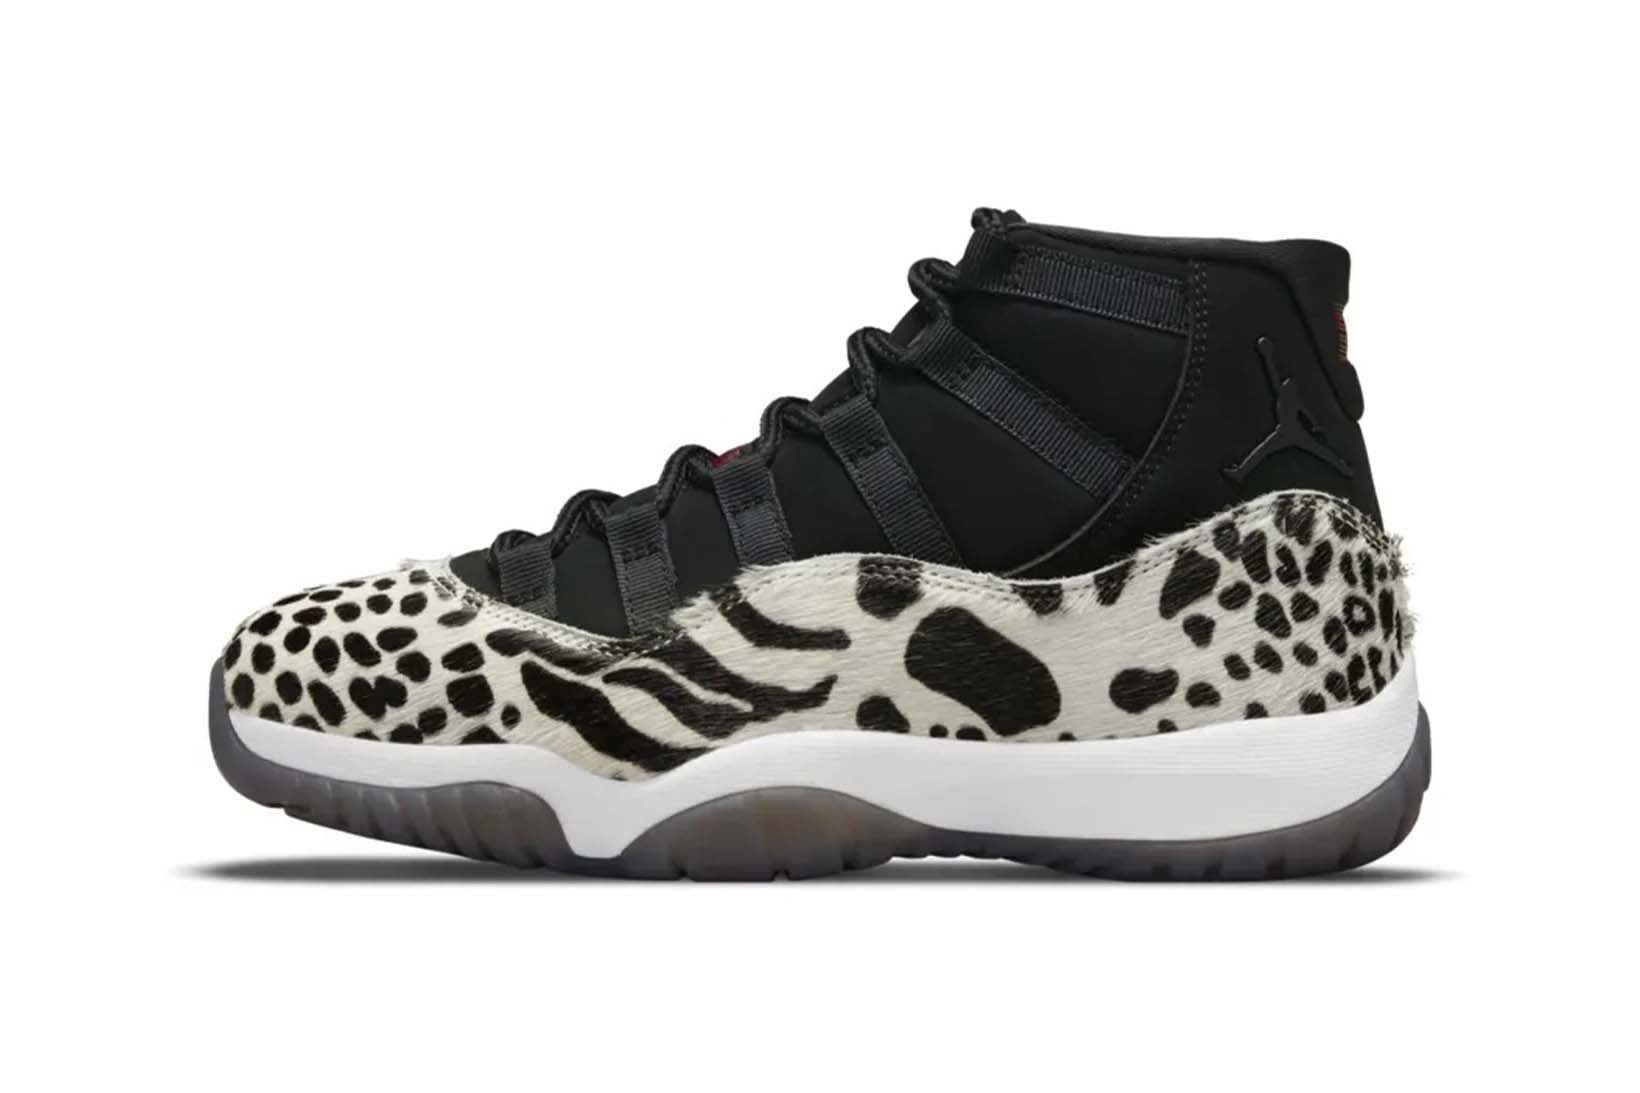 Nike Air Jordan 11 Women Black White Animal Print Black Friday Release Date